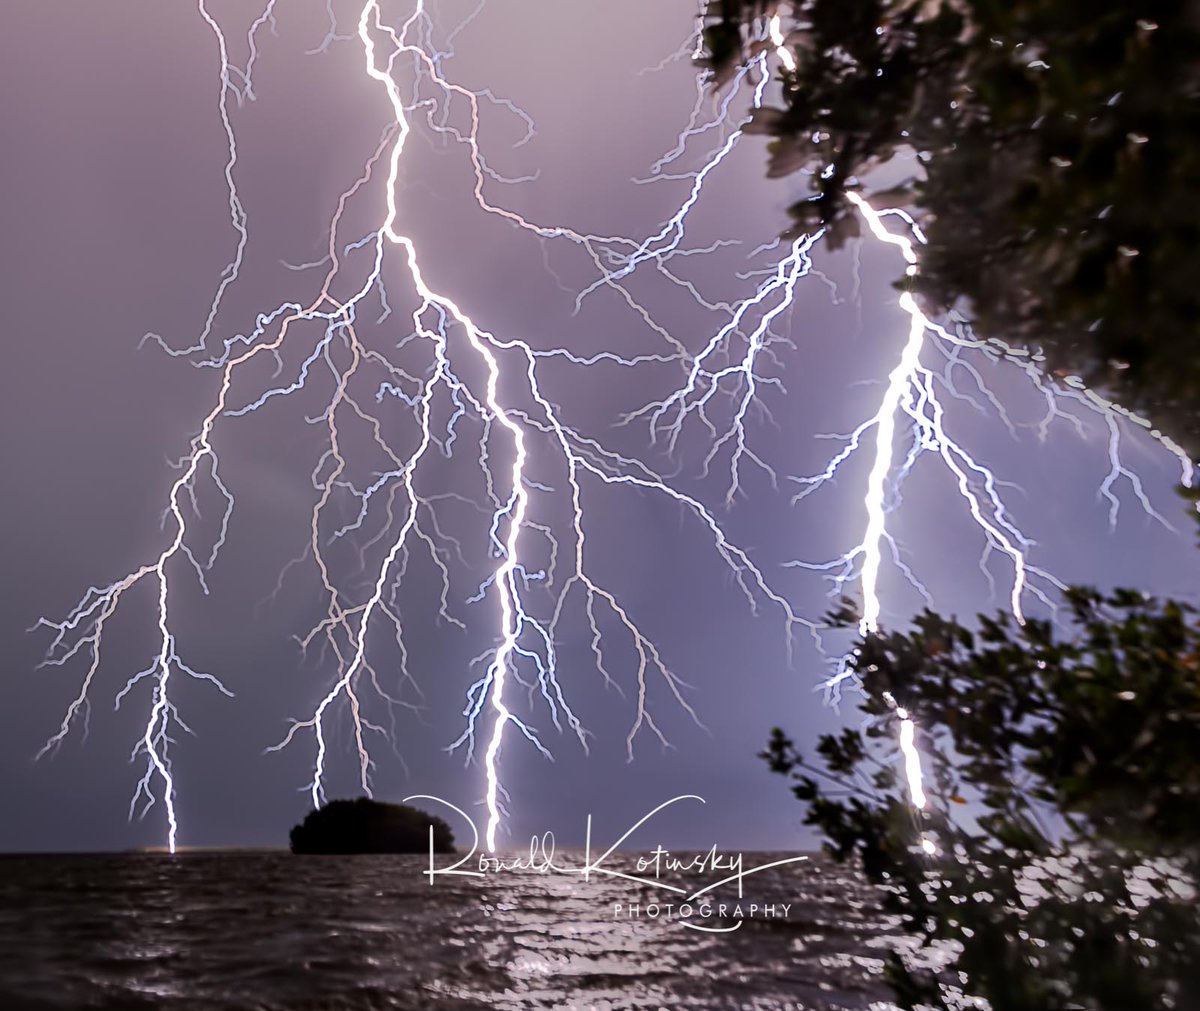 The Rain of Pain - Apollo Beach - Florida by Ronald Kotinsky @rkotinsky